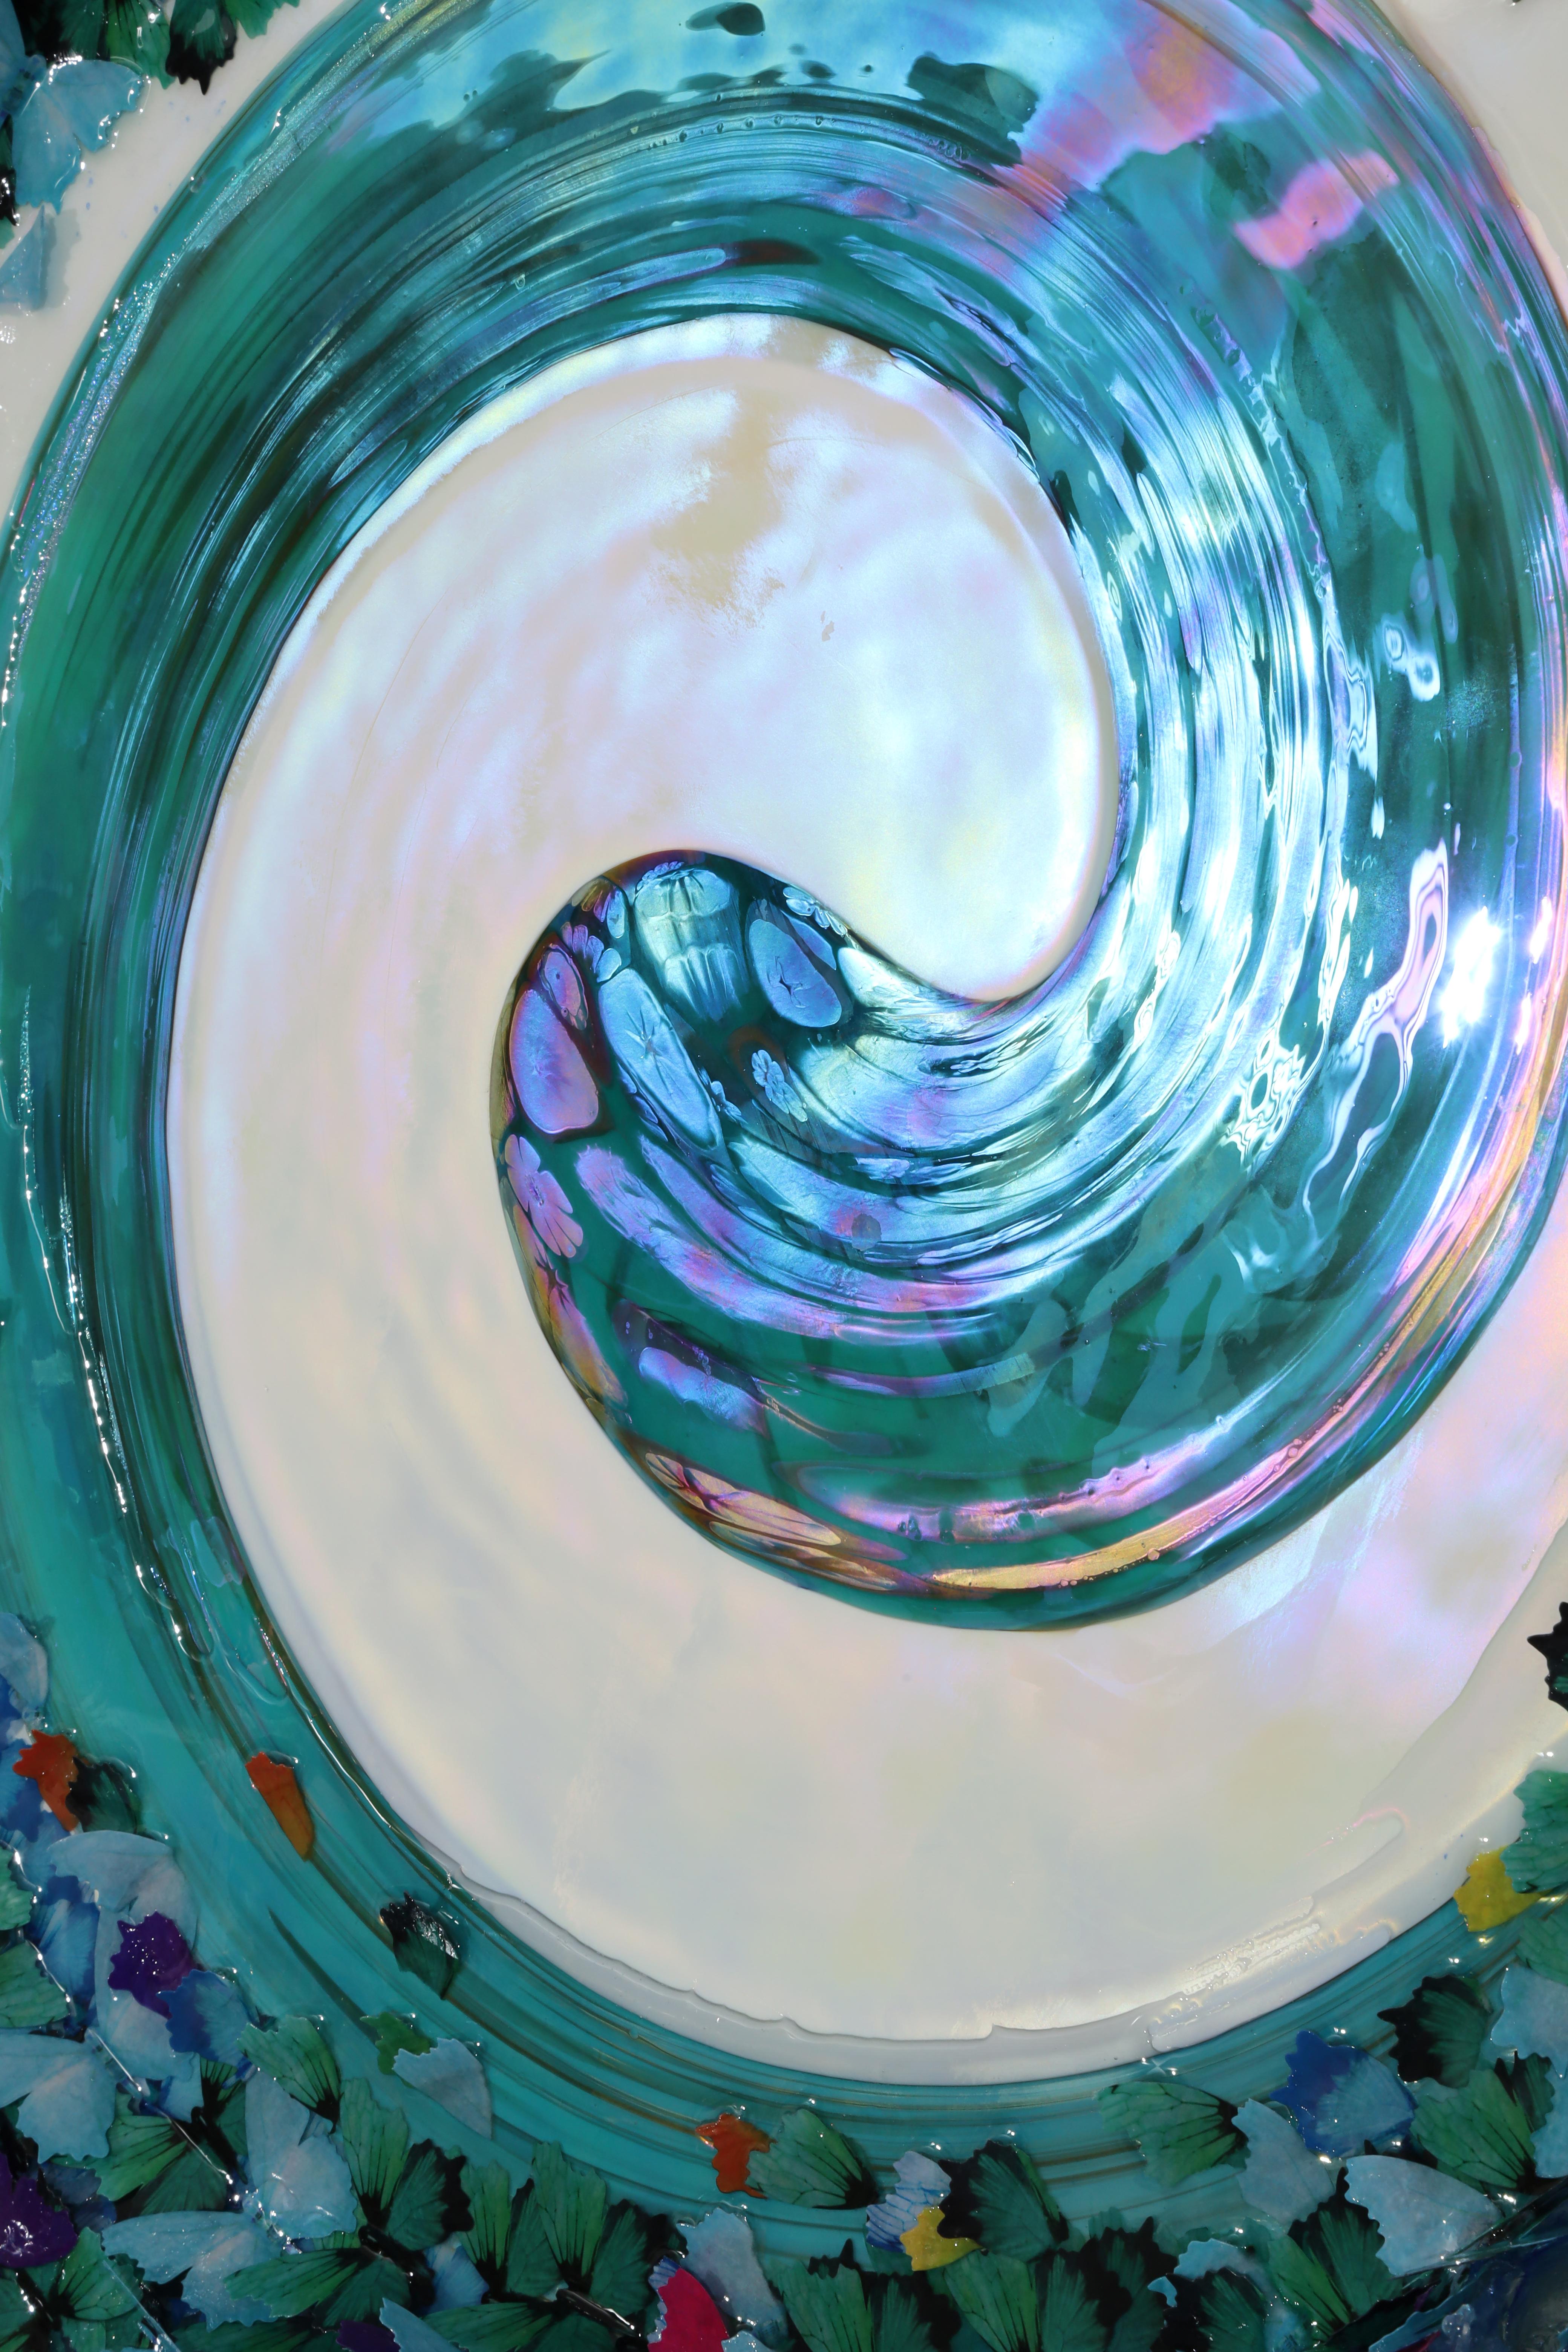 Dreamcatcher Spiral of Tales 180 cm 2